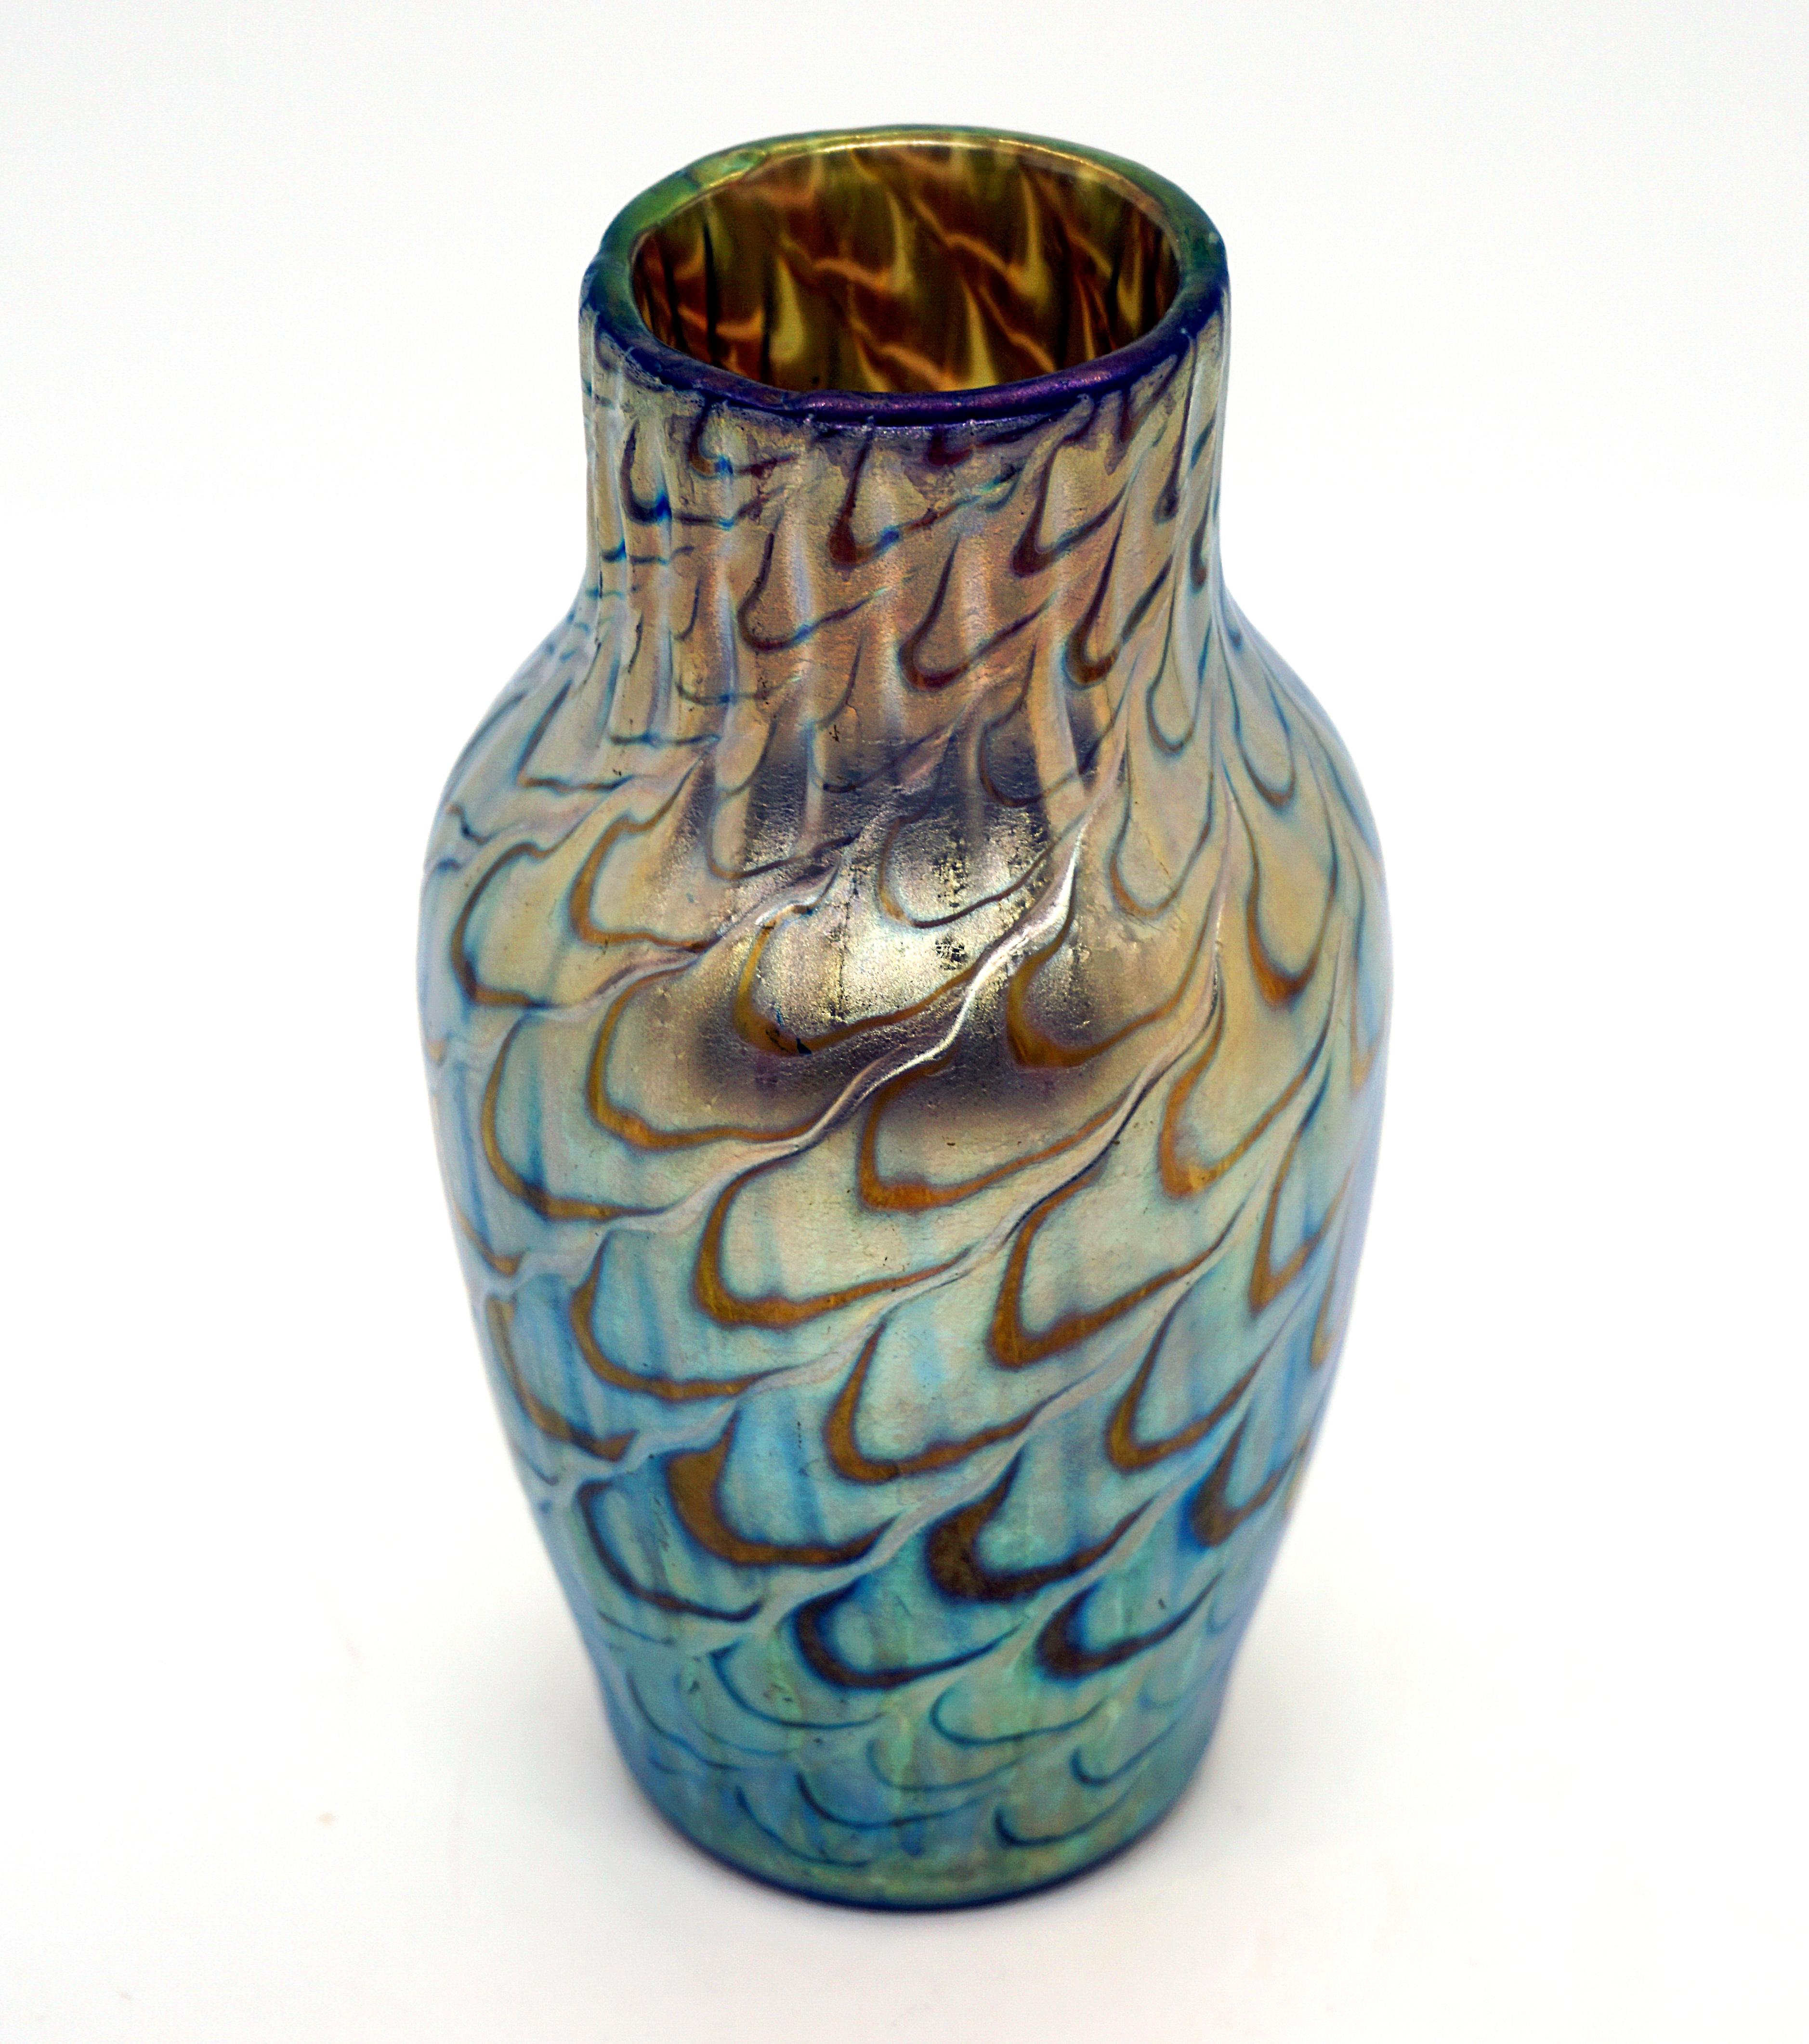 Hand-Crafted Loetz Art Nouveau Glass Vase Phenomenon Genre 7734, Austria-Hungary, circa 1898 For Sale